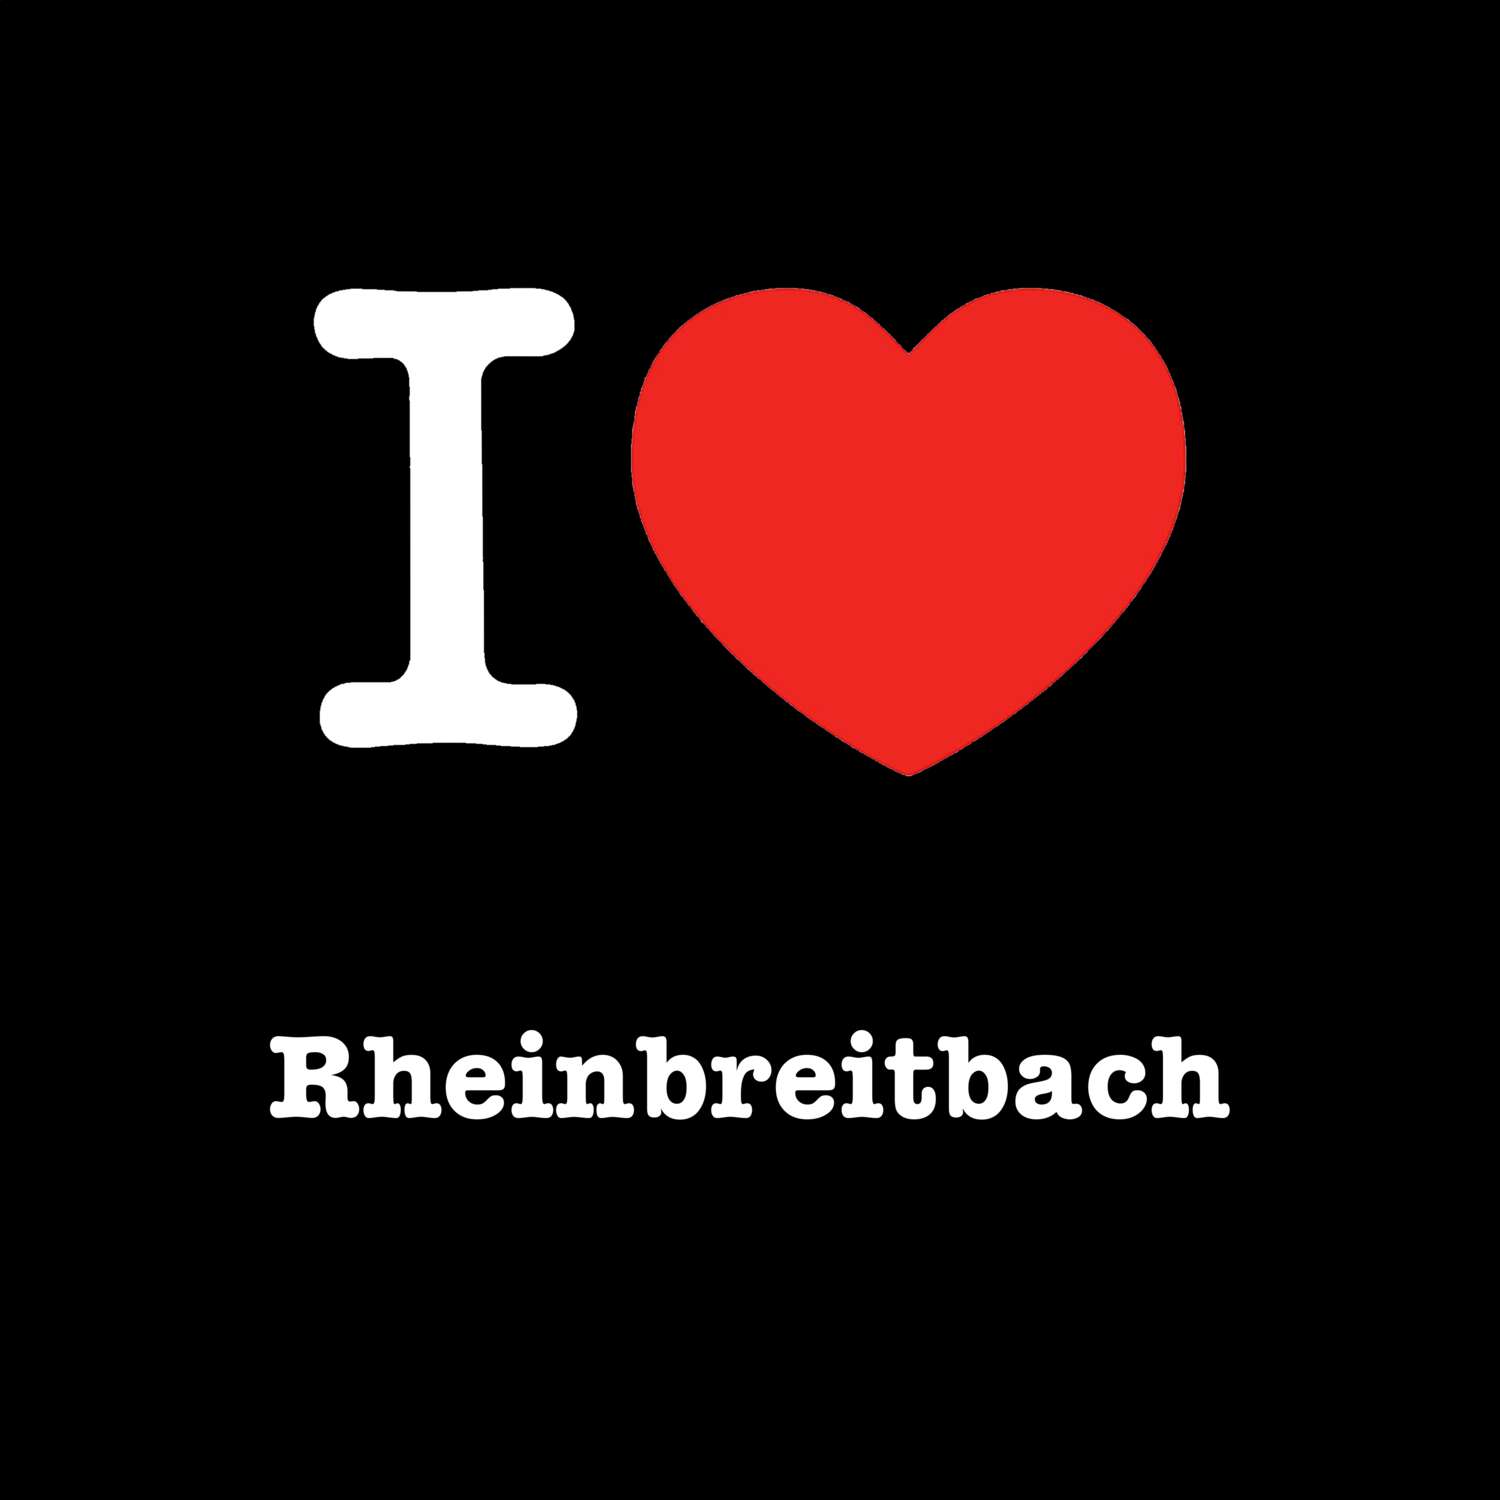 Rheinbreitbach T-Shirt »I love«